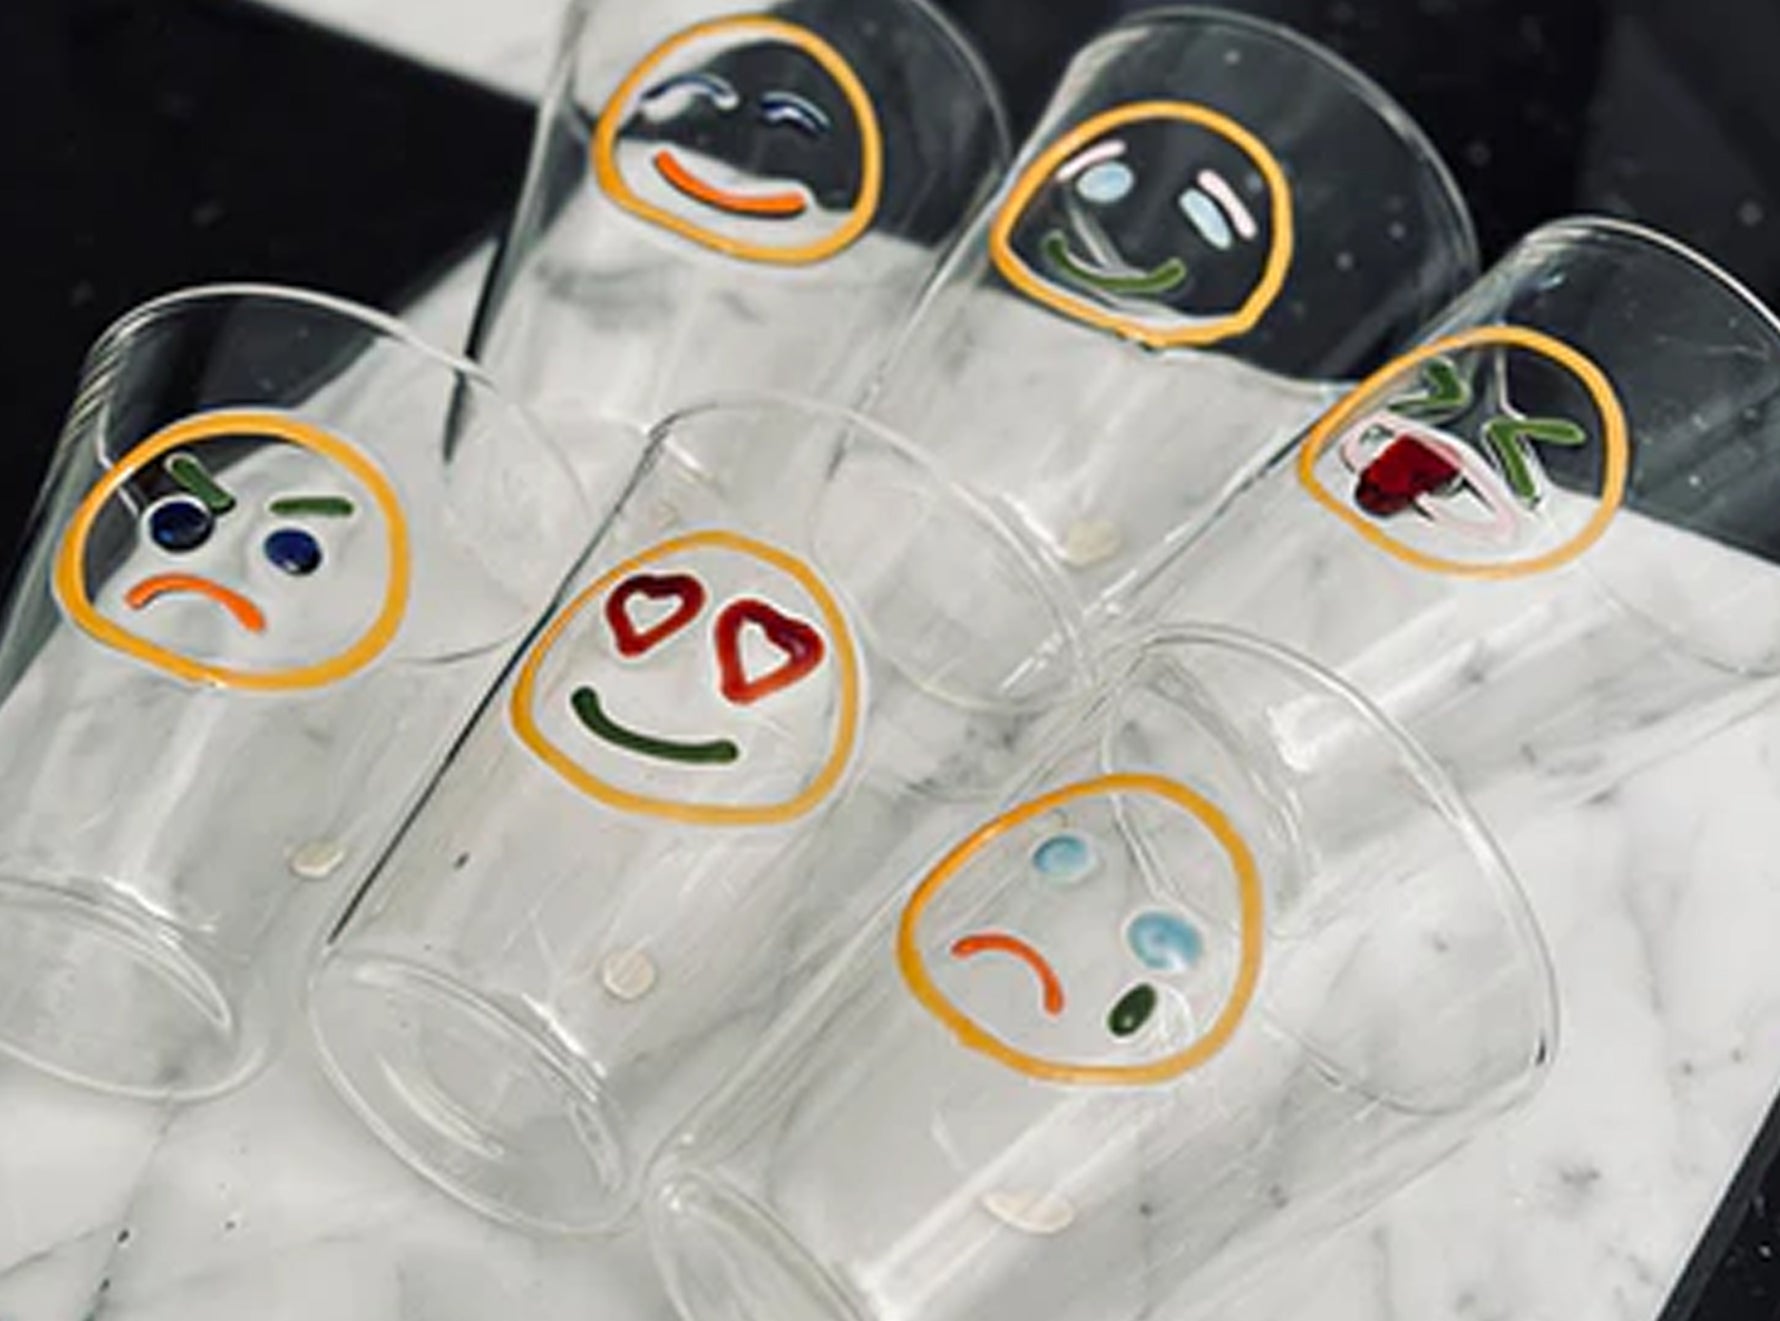 Handblown Glass 'Happy' Mood Tumbler